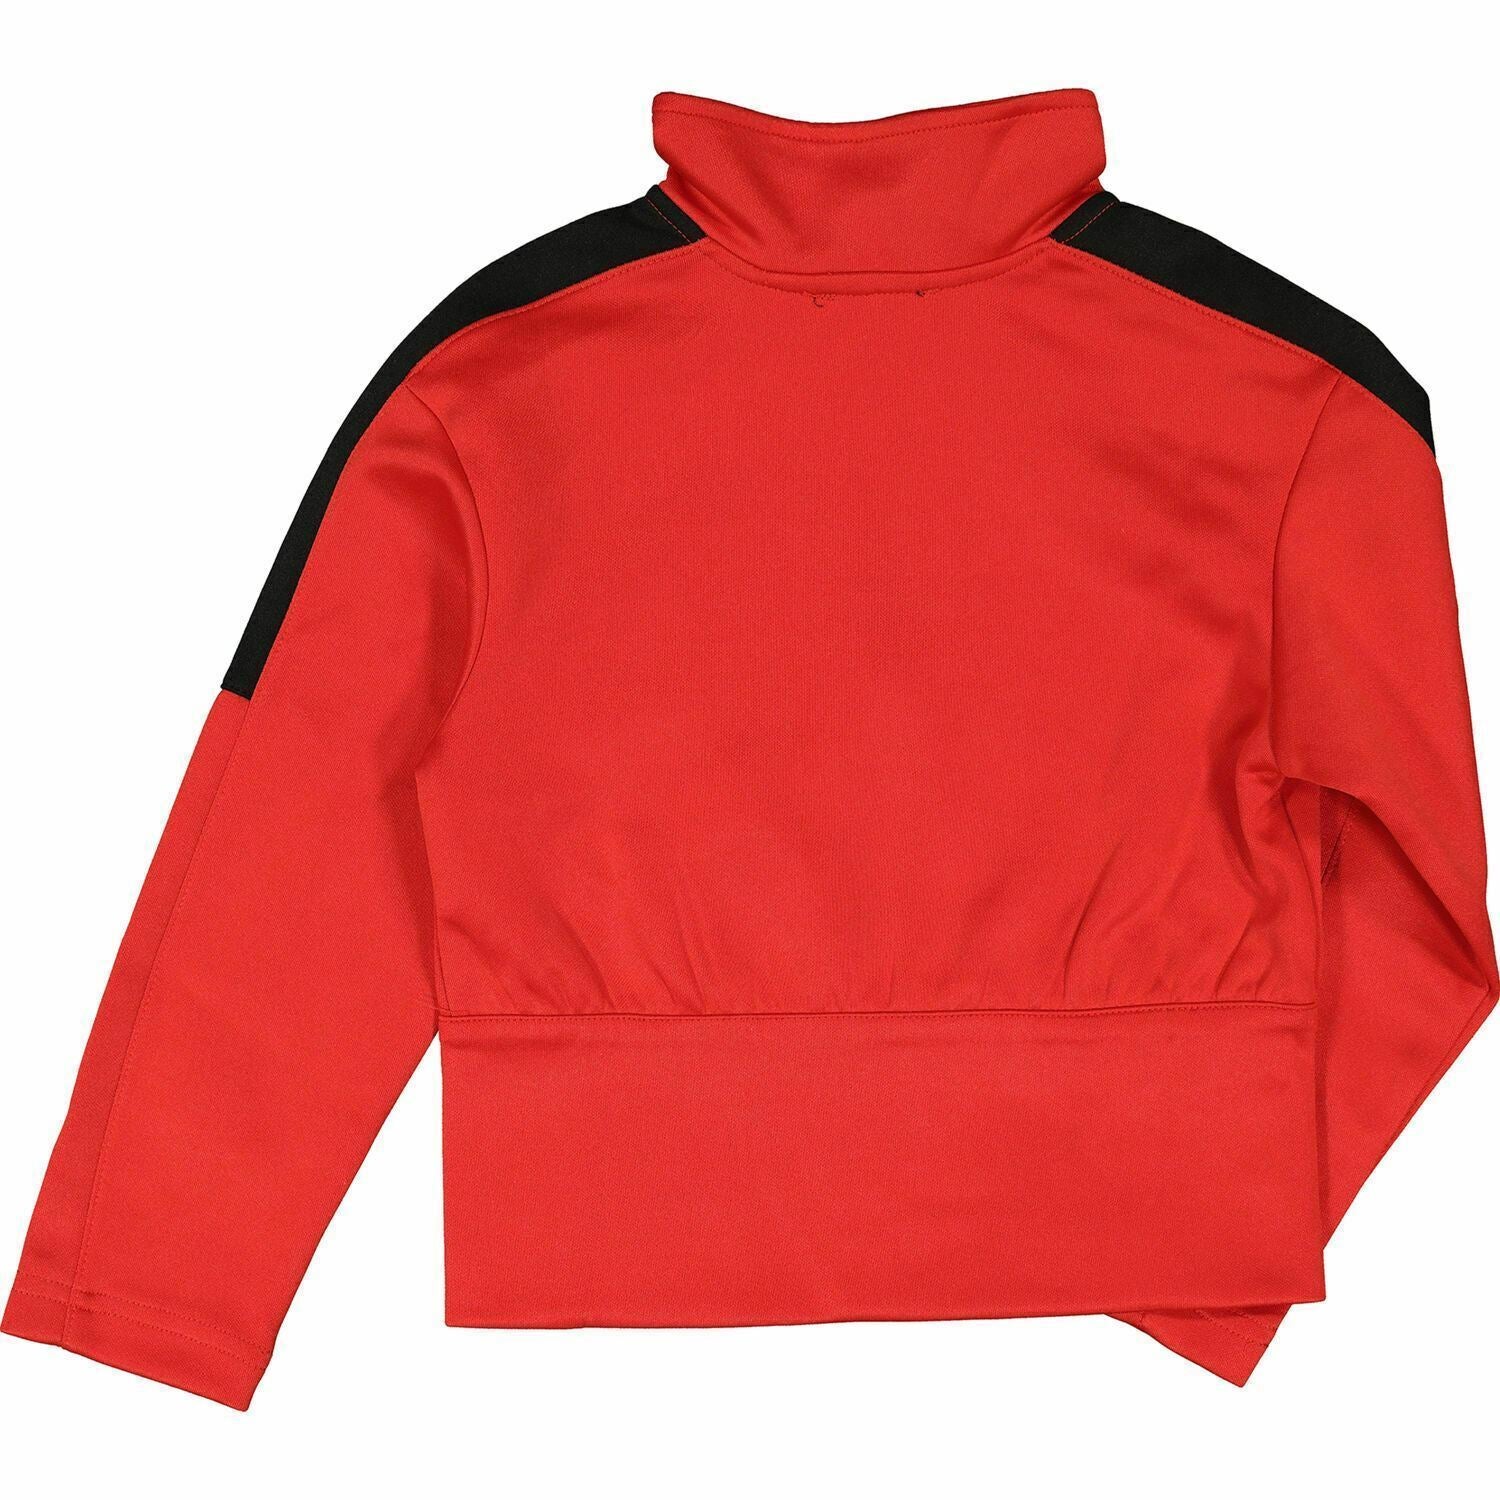 DIESEL Girls' Kids' Zip Up Funnel Neck Track Jacket, Red/Black, size 8 years